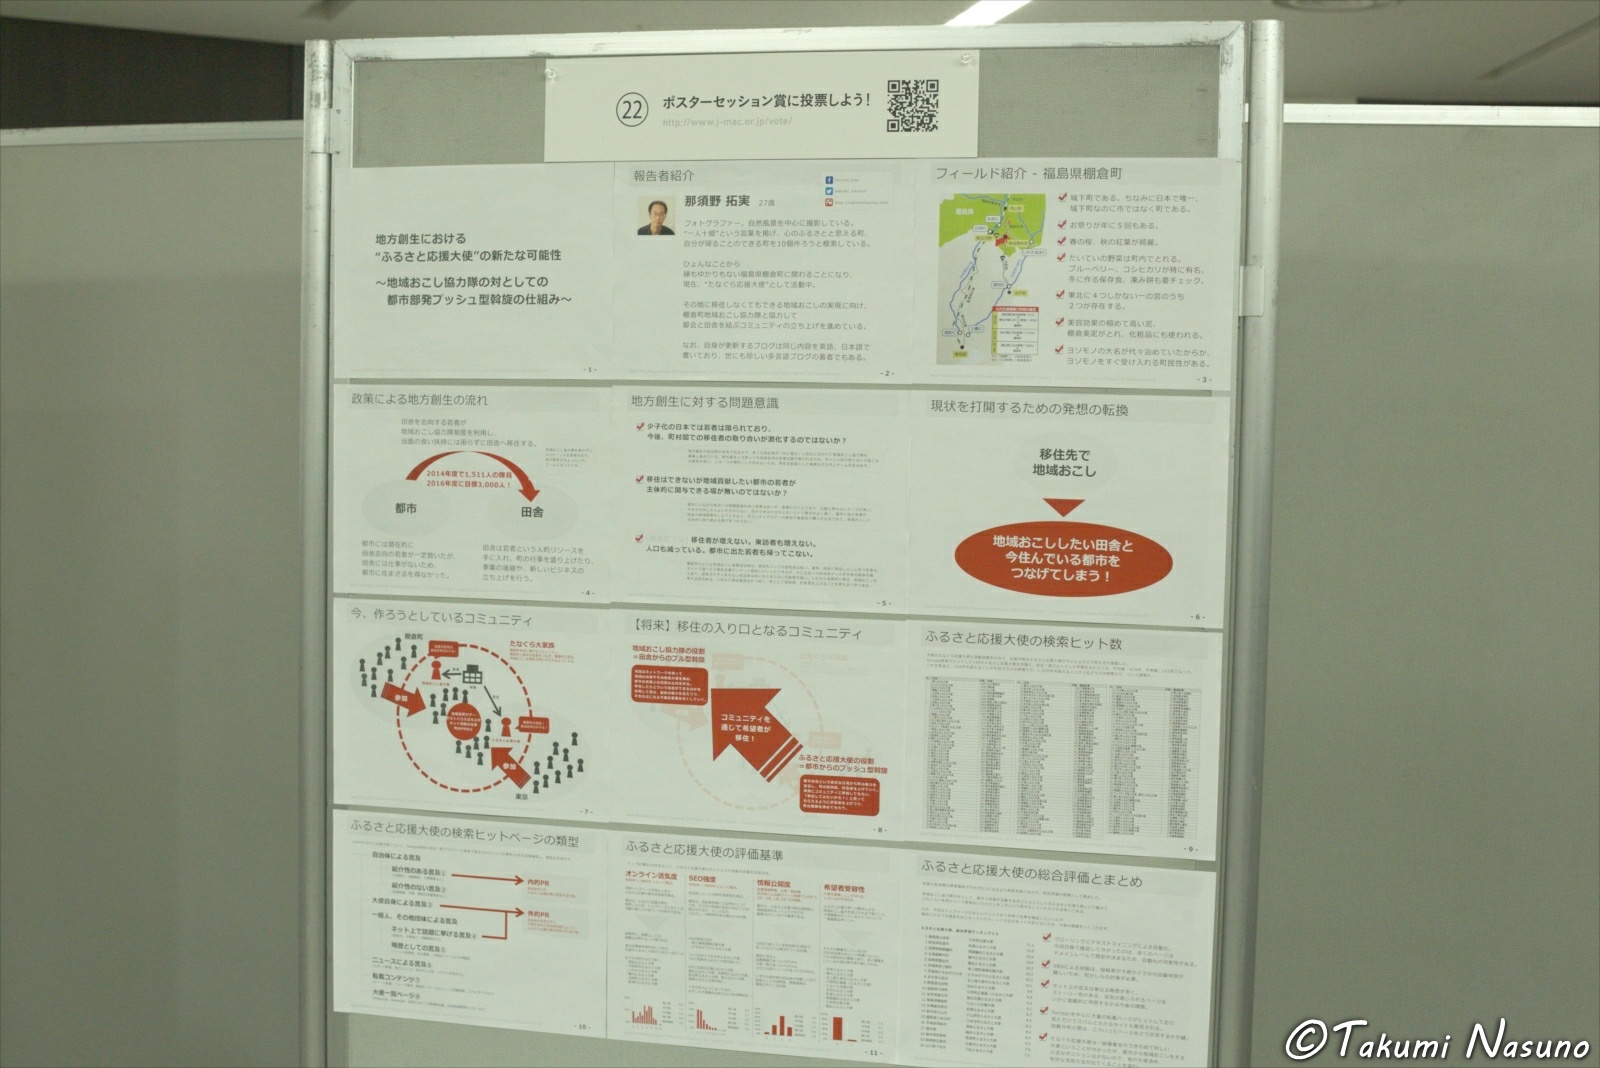 Poster for Japan Marketing Association Conference 2015